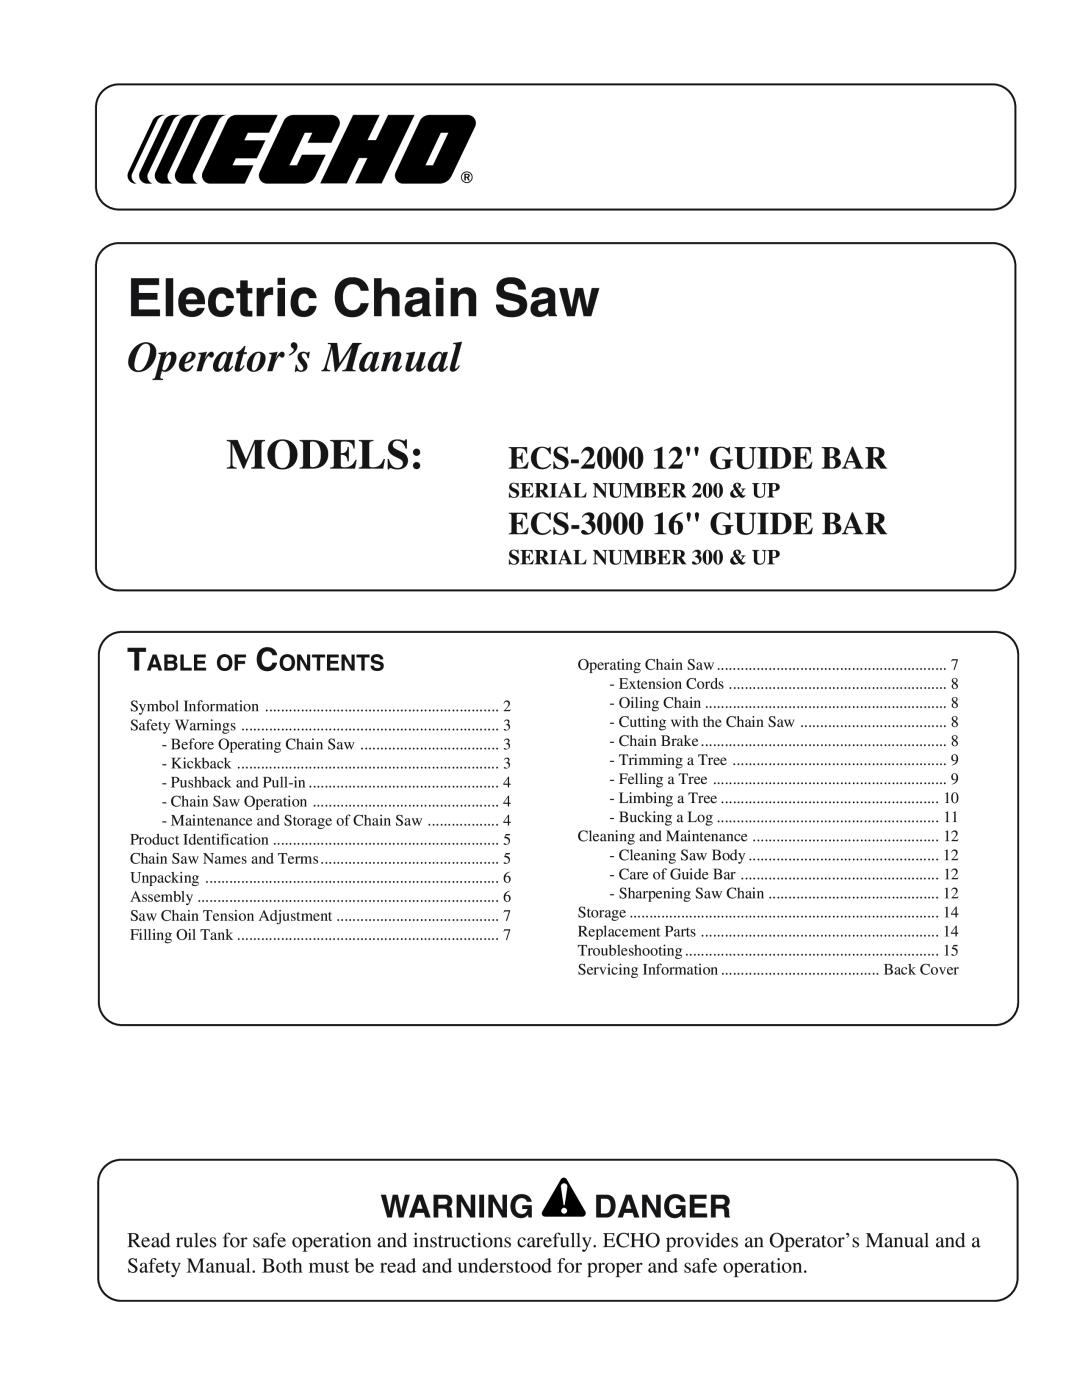 Echo manual Warning Danger, Electric Chain Saw, Operator’s Manual, MODELS ECS-200012 GUIDE BAR, ECS-300016 GUIDE BAR 